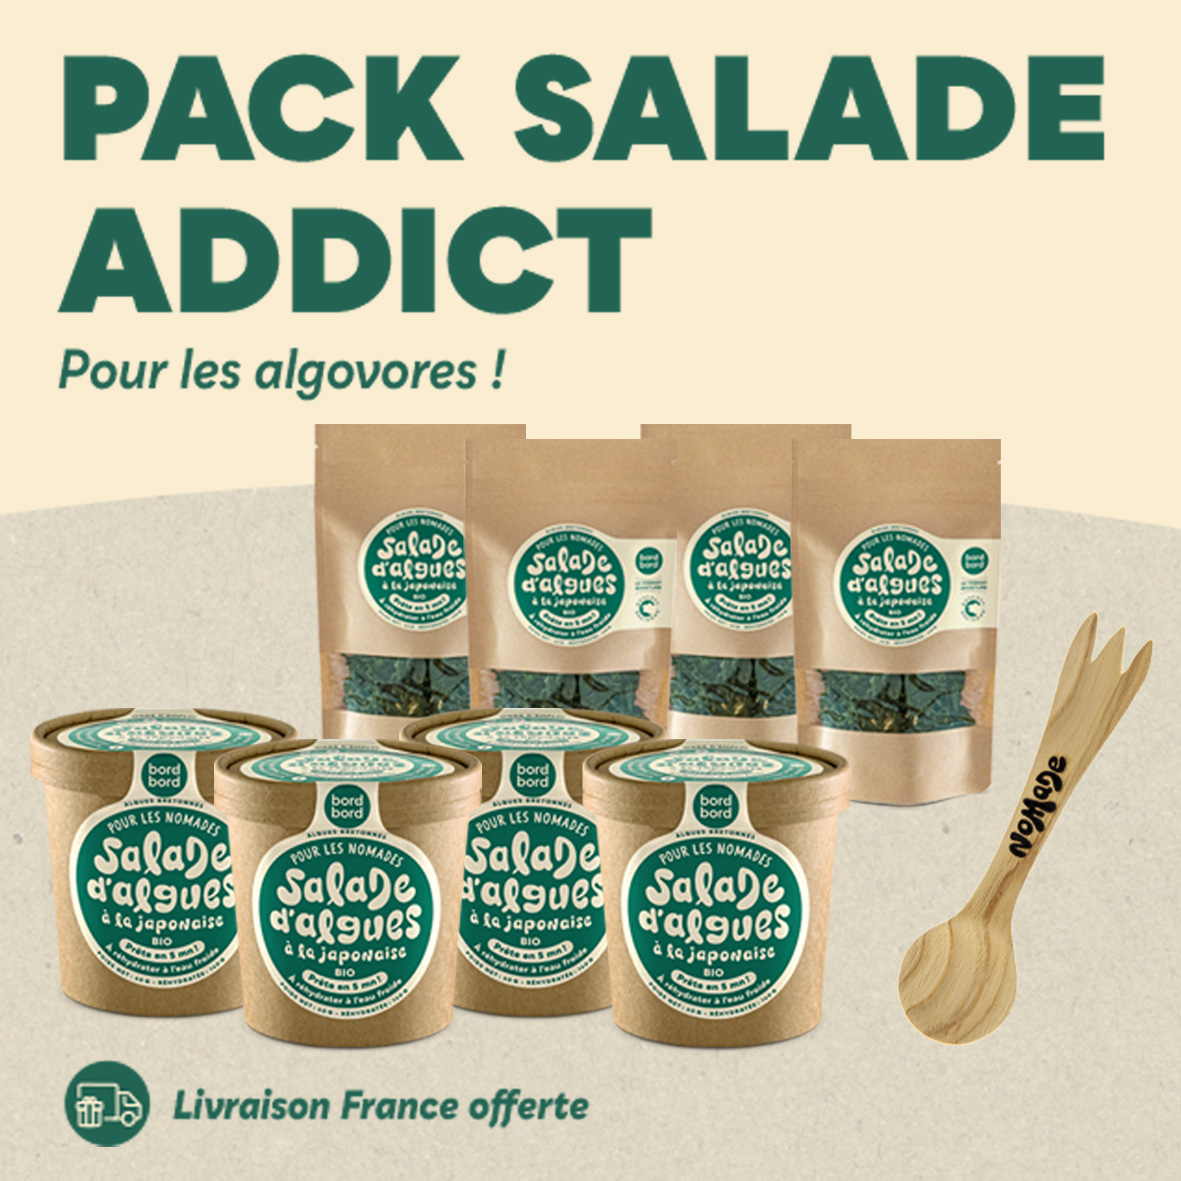 Pack “SALADE ADDICT“